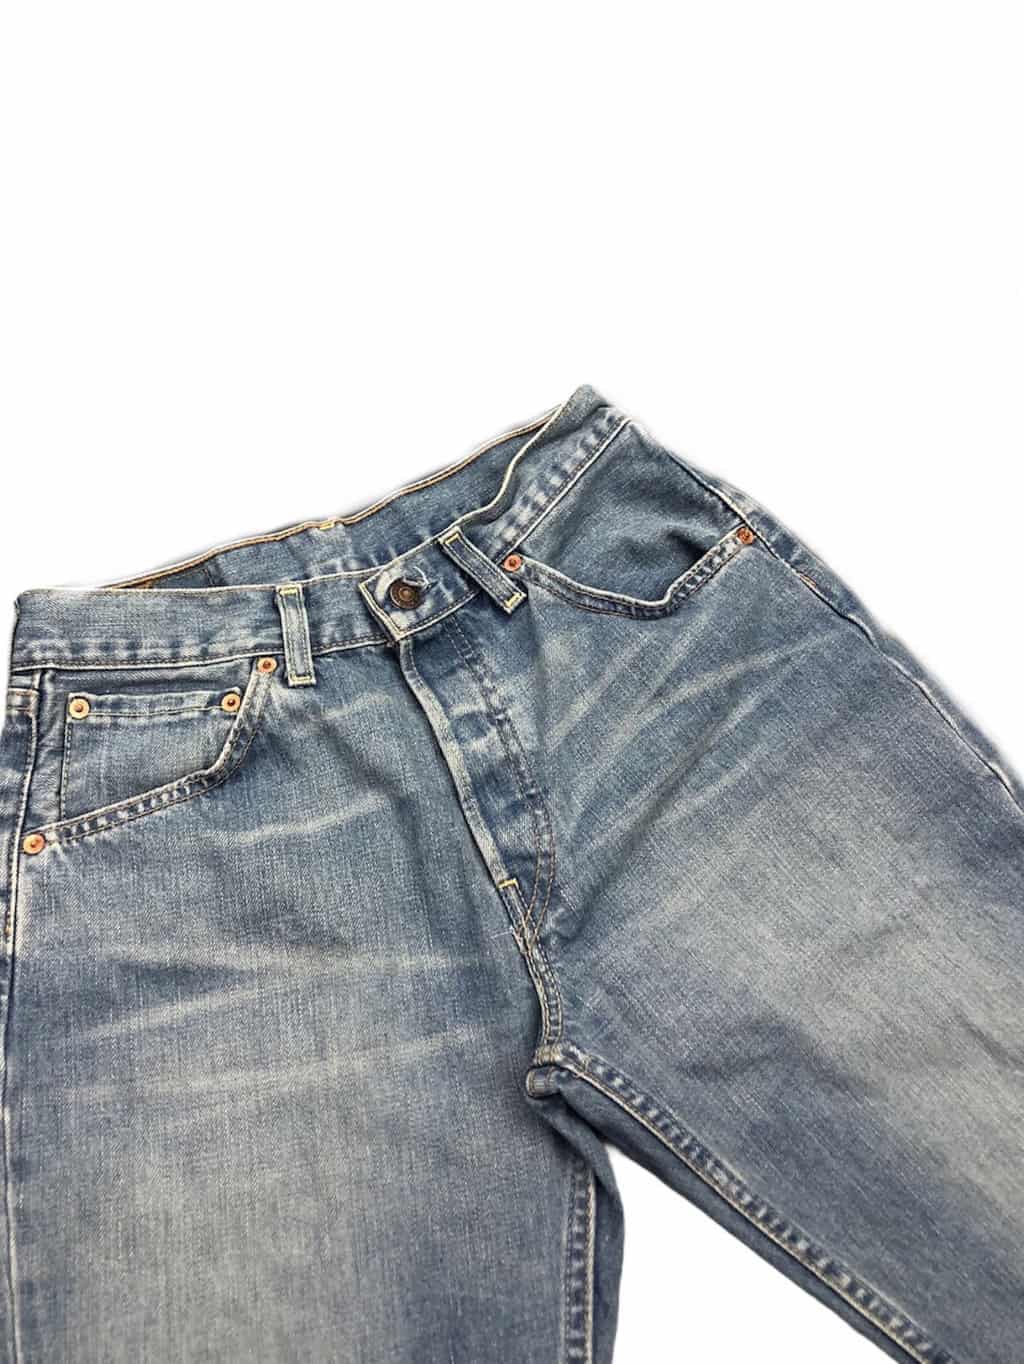 Vintage 90s Levis 535 straight leg jeans in light / mid-blue - W28 x   - St Cyr Vintage